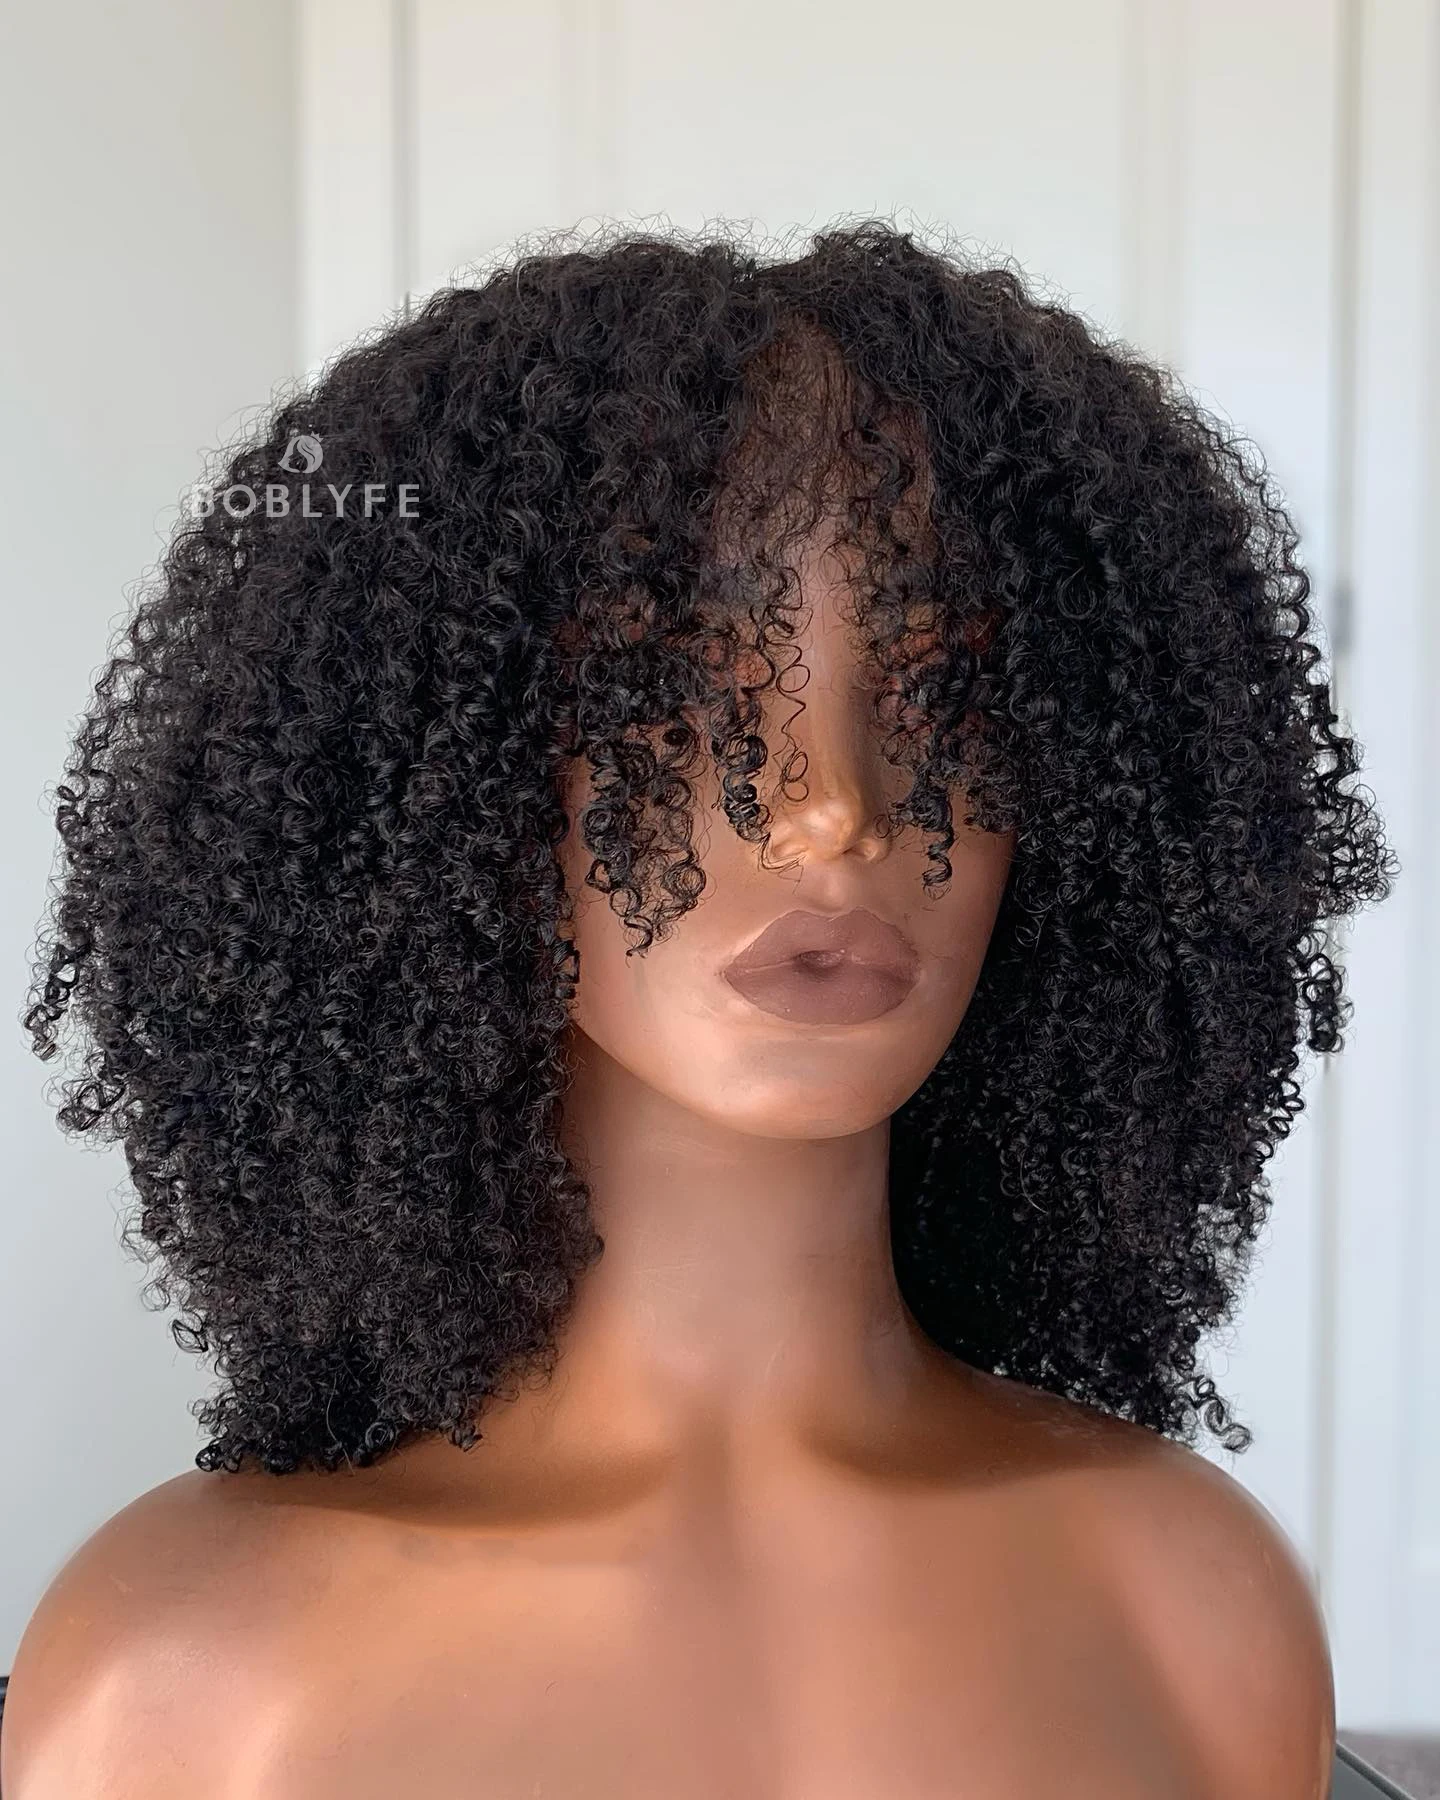 Peluca rizada Afro con flequillo hecha a máquina, cuero cabelludo completo, 180, 200, 250 de densidad, cabello humano brasileño Remy